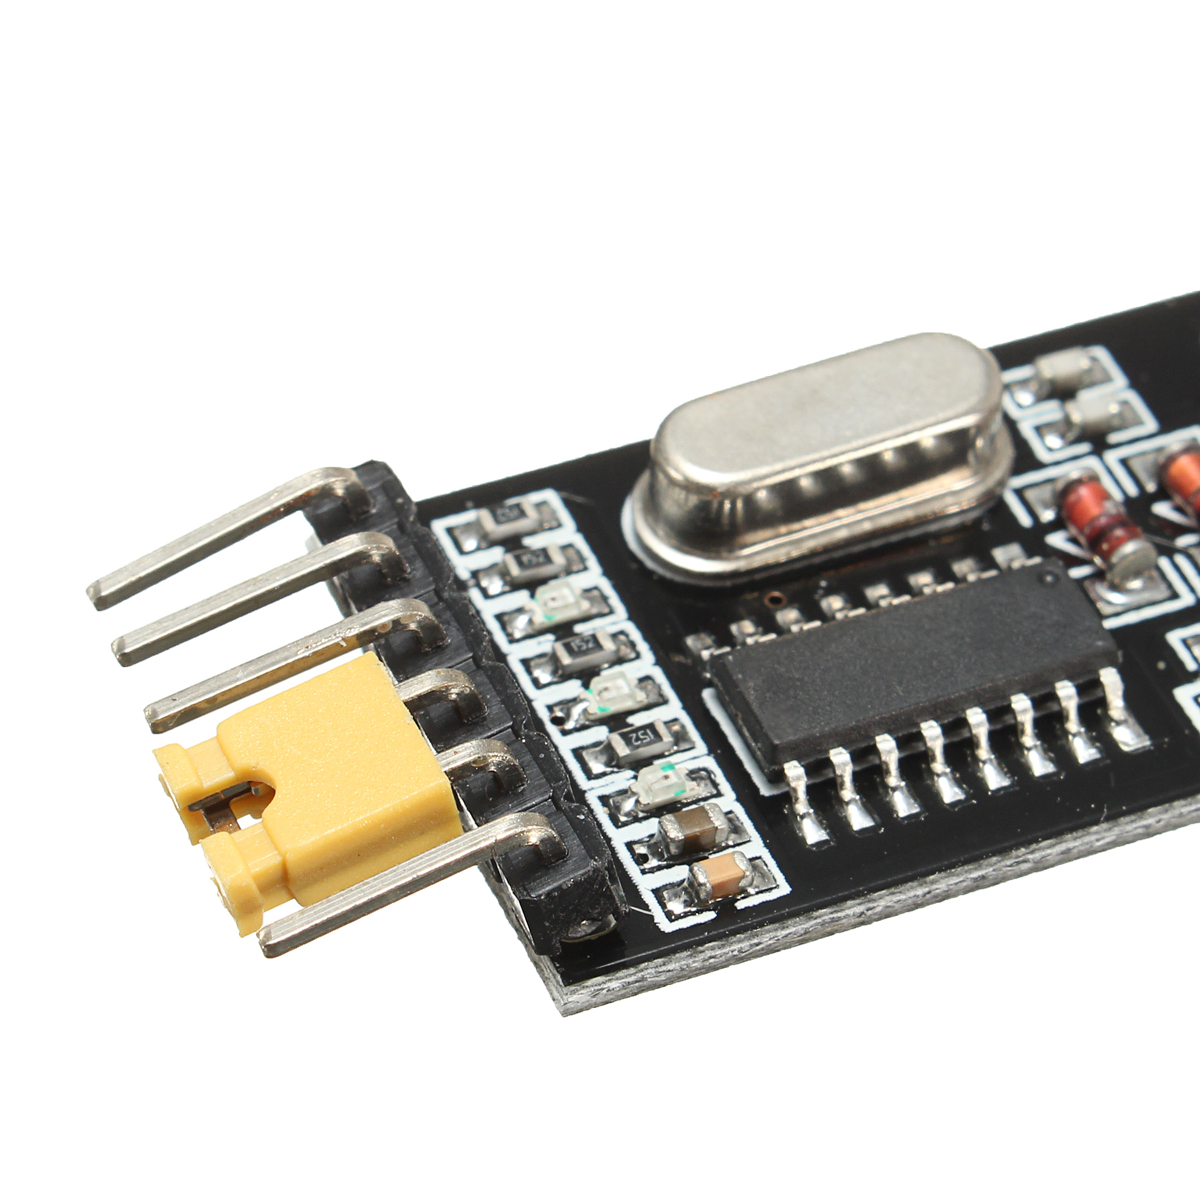 10pcs-33V-5V-USB-to-TTL-Converter-CH340G-UART-Serial-Adapter-Module-STC-1314967-6